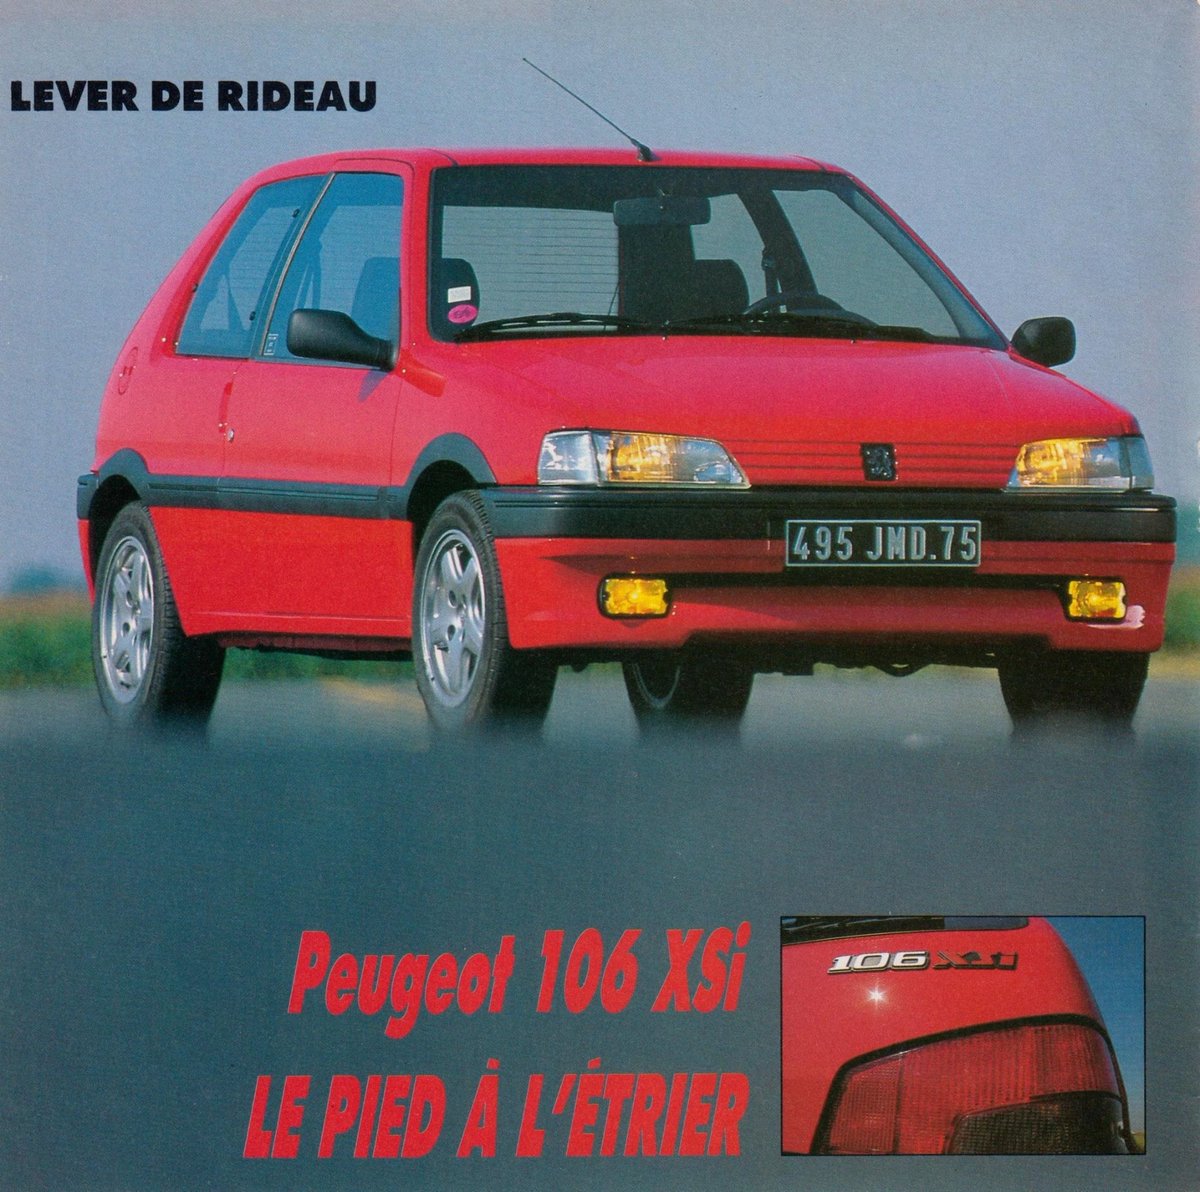 Peugeot 106 XSi
Echappement - 275/1991 (France) 
#peugeot #peugeot106 #peugeot106xsi #106xsi #peugeotcars #frenchcars #exyu #sfrj #jna #formeryugoslavia